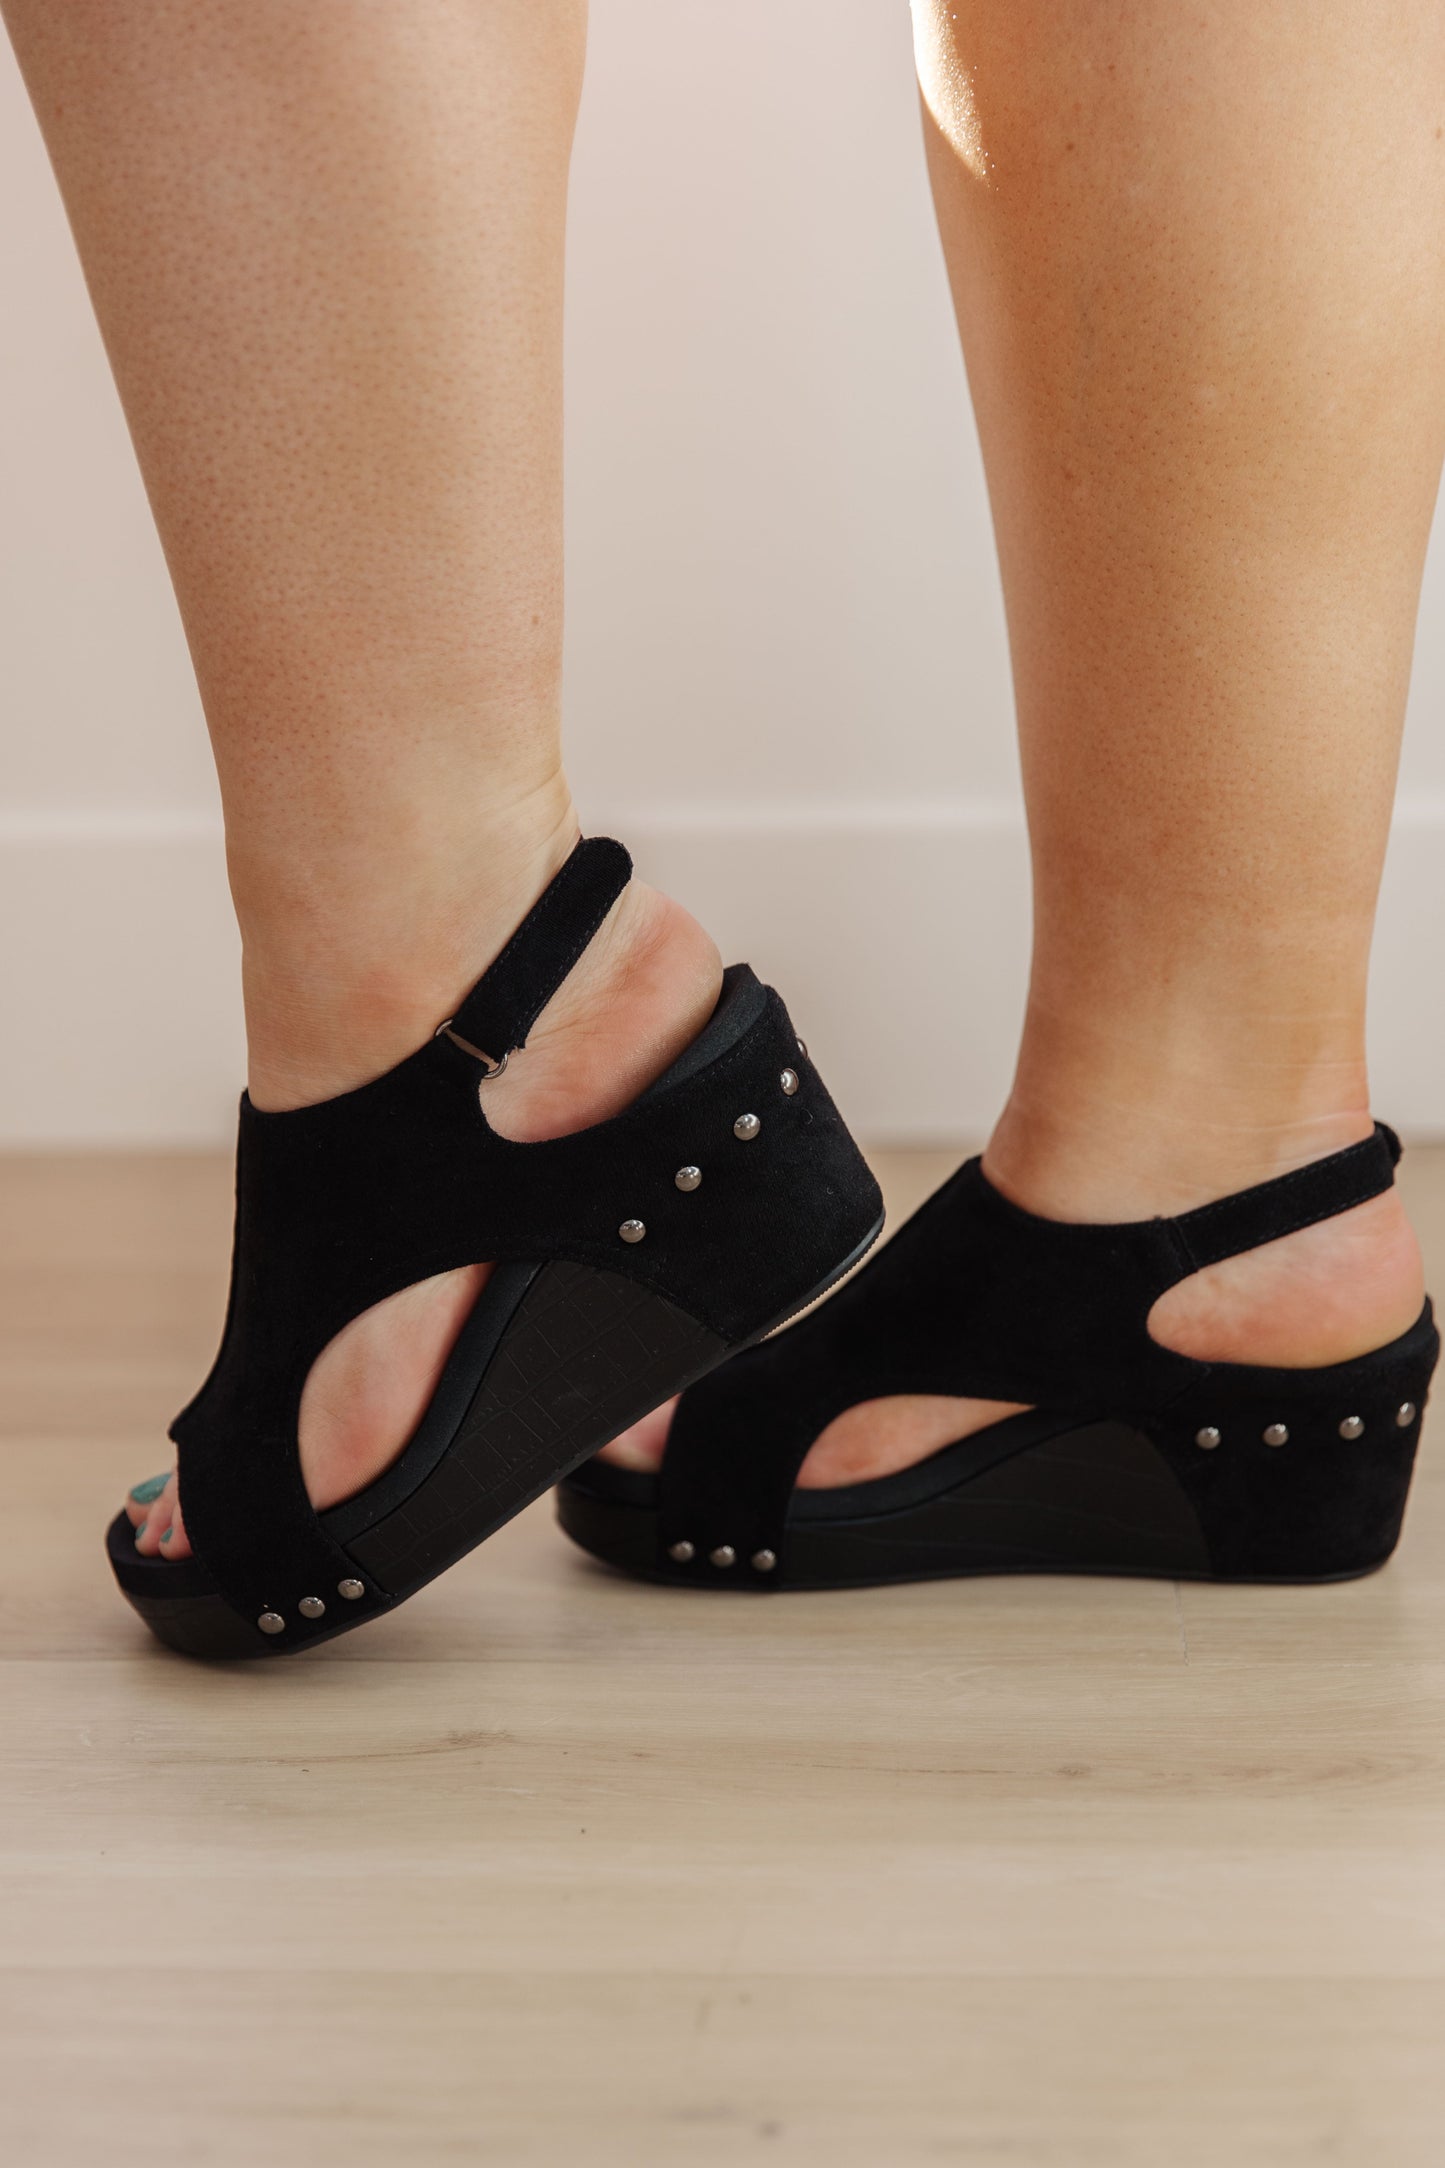 Walk This Way Wedge Sandals in Black Suede - CORKYS